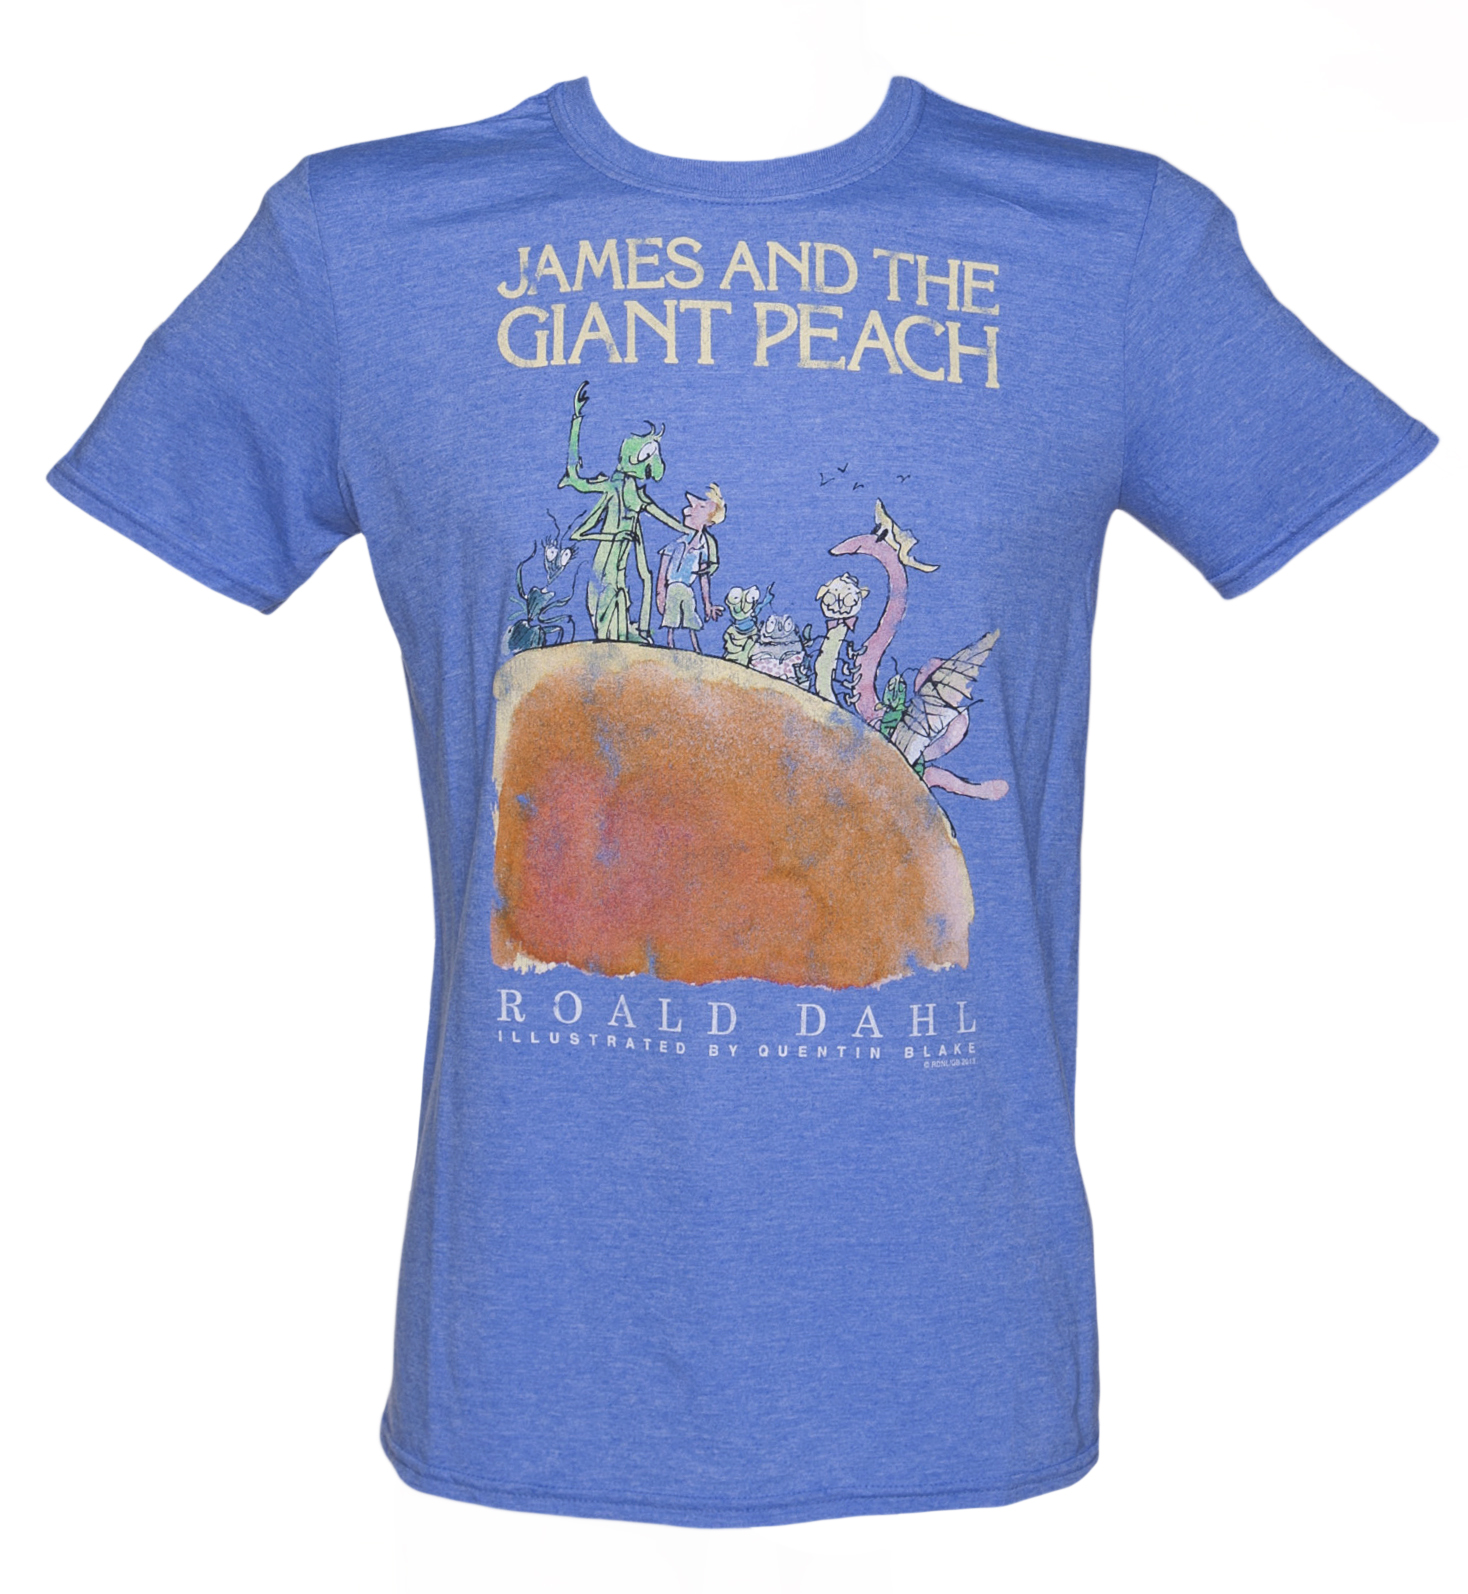 Mens Roald Dahl James and the Giant Peach T-Shirt